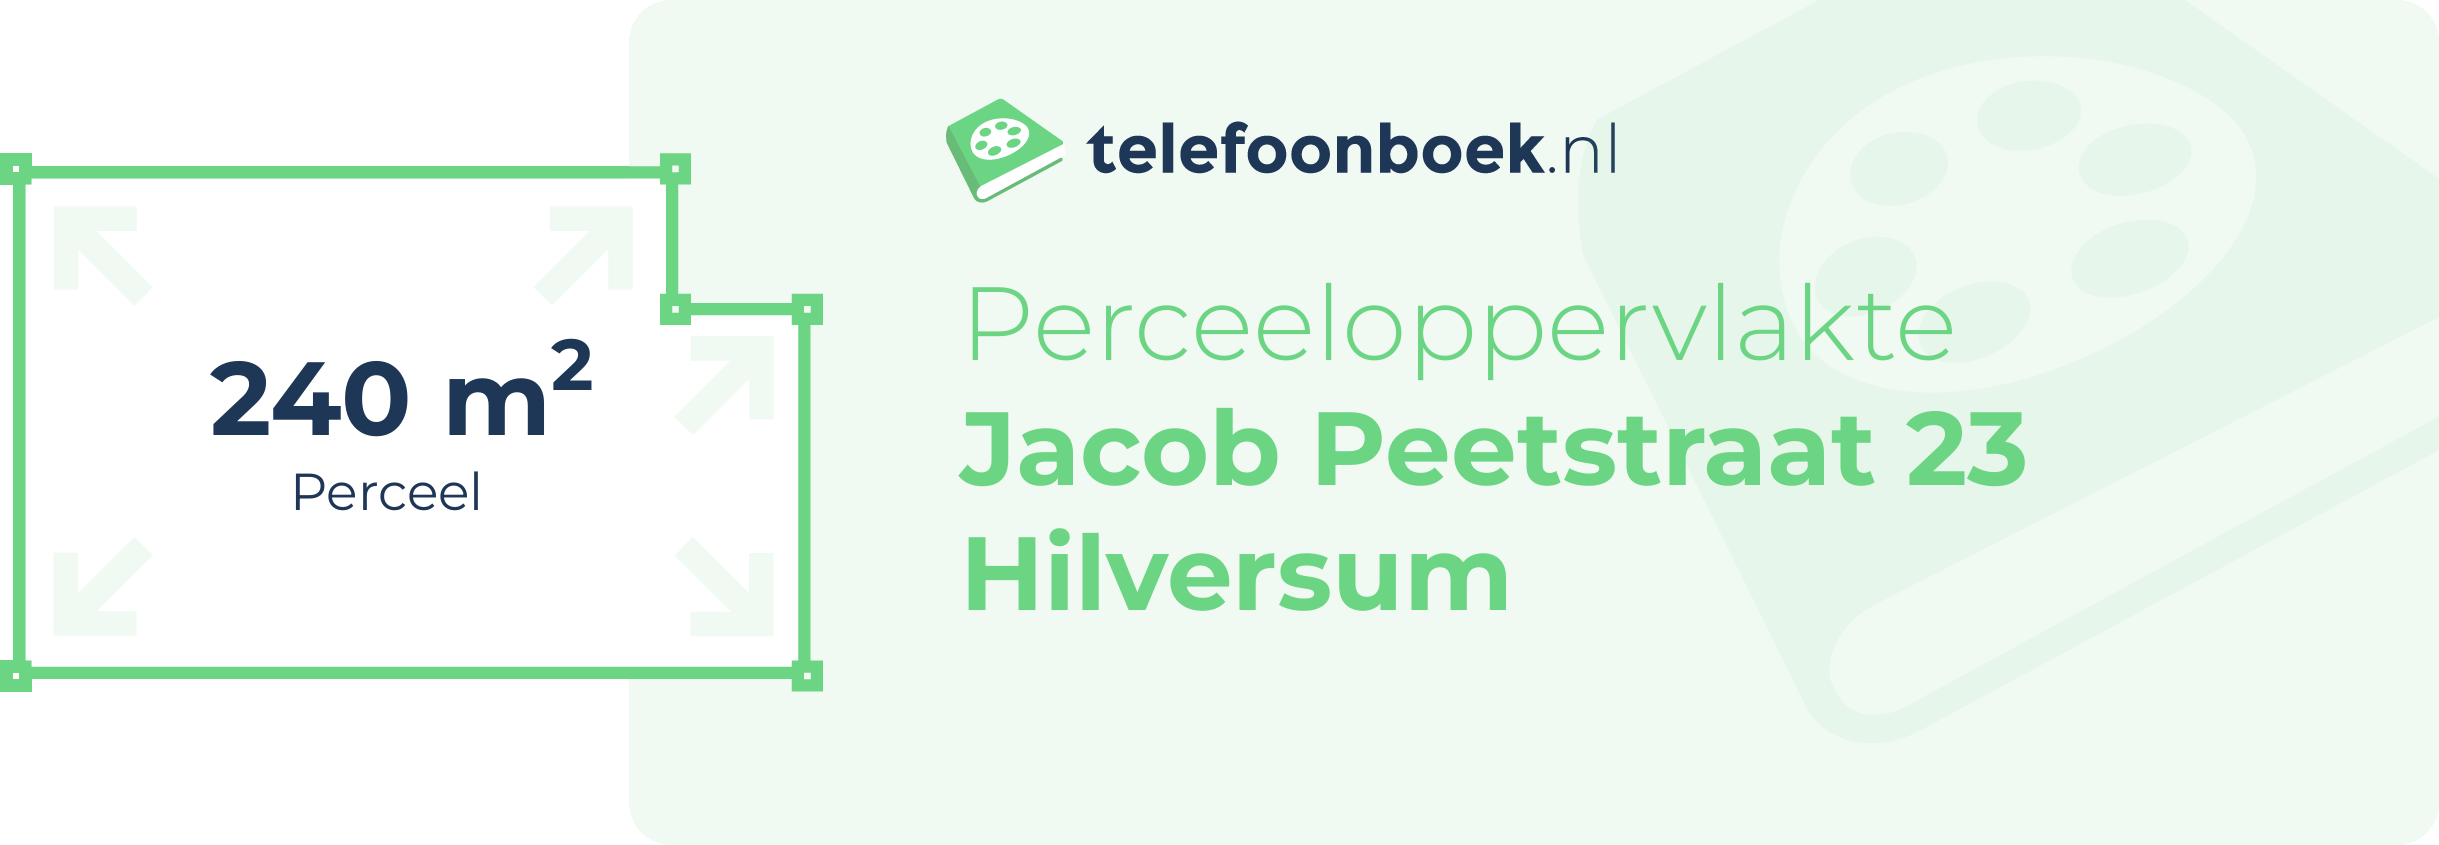 Perceeloppervlakte Jacob Peetstraat 23 Hilversum